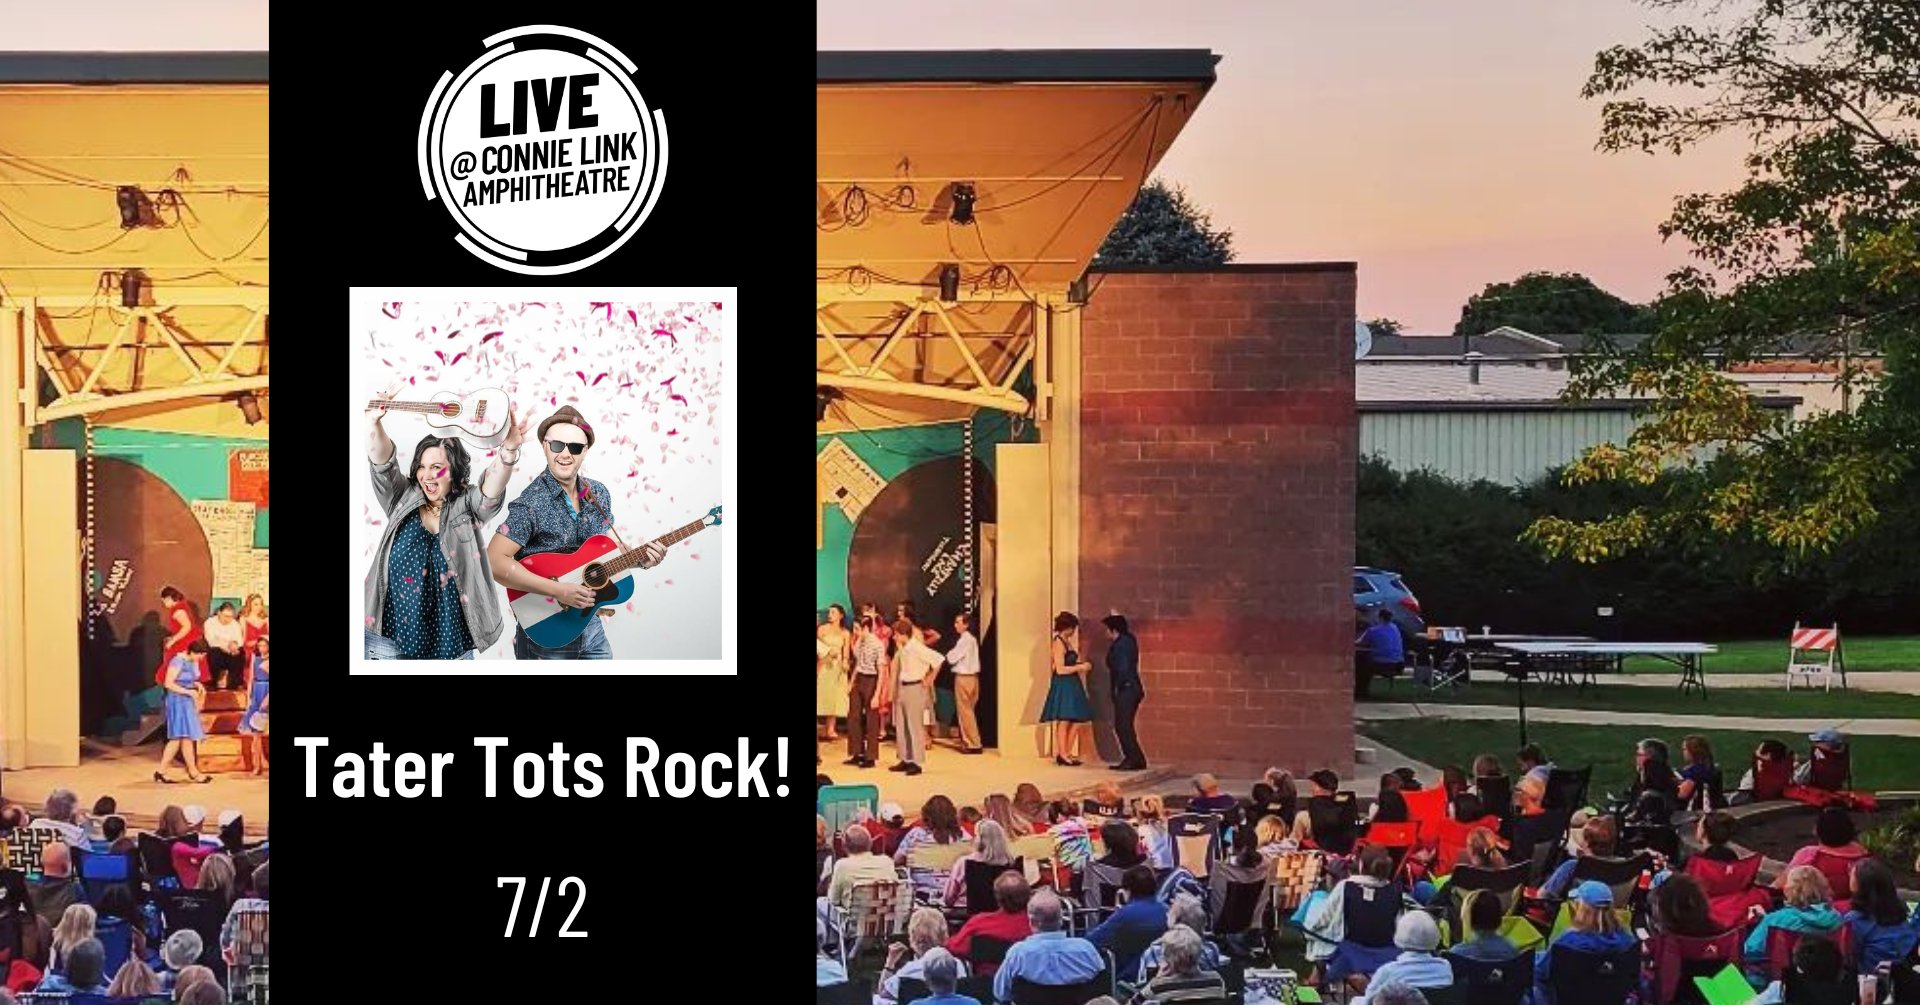 Terrific Tuesdays: Tater Tots Rock! - Live @ Connie Link Amphitheatre